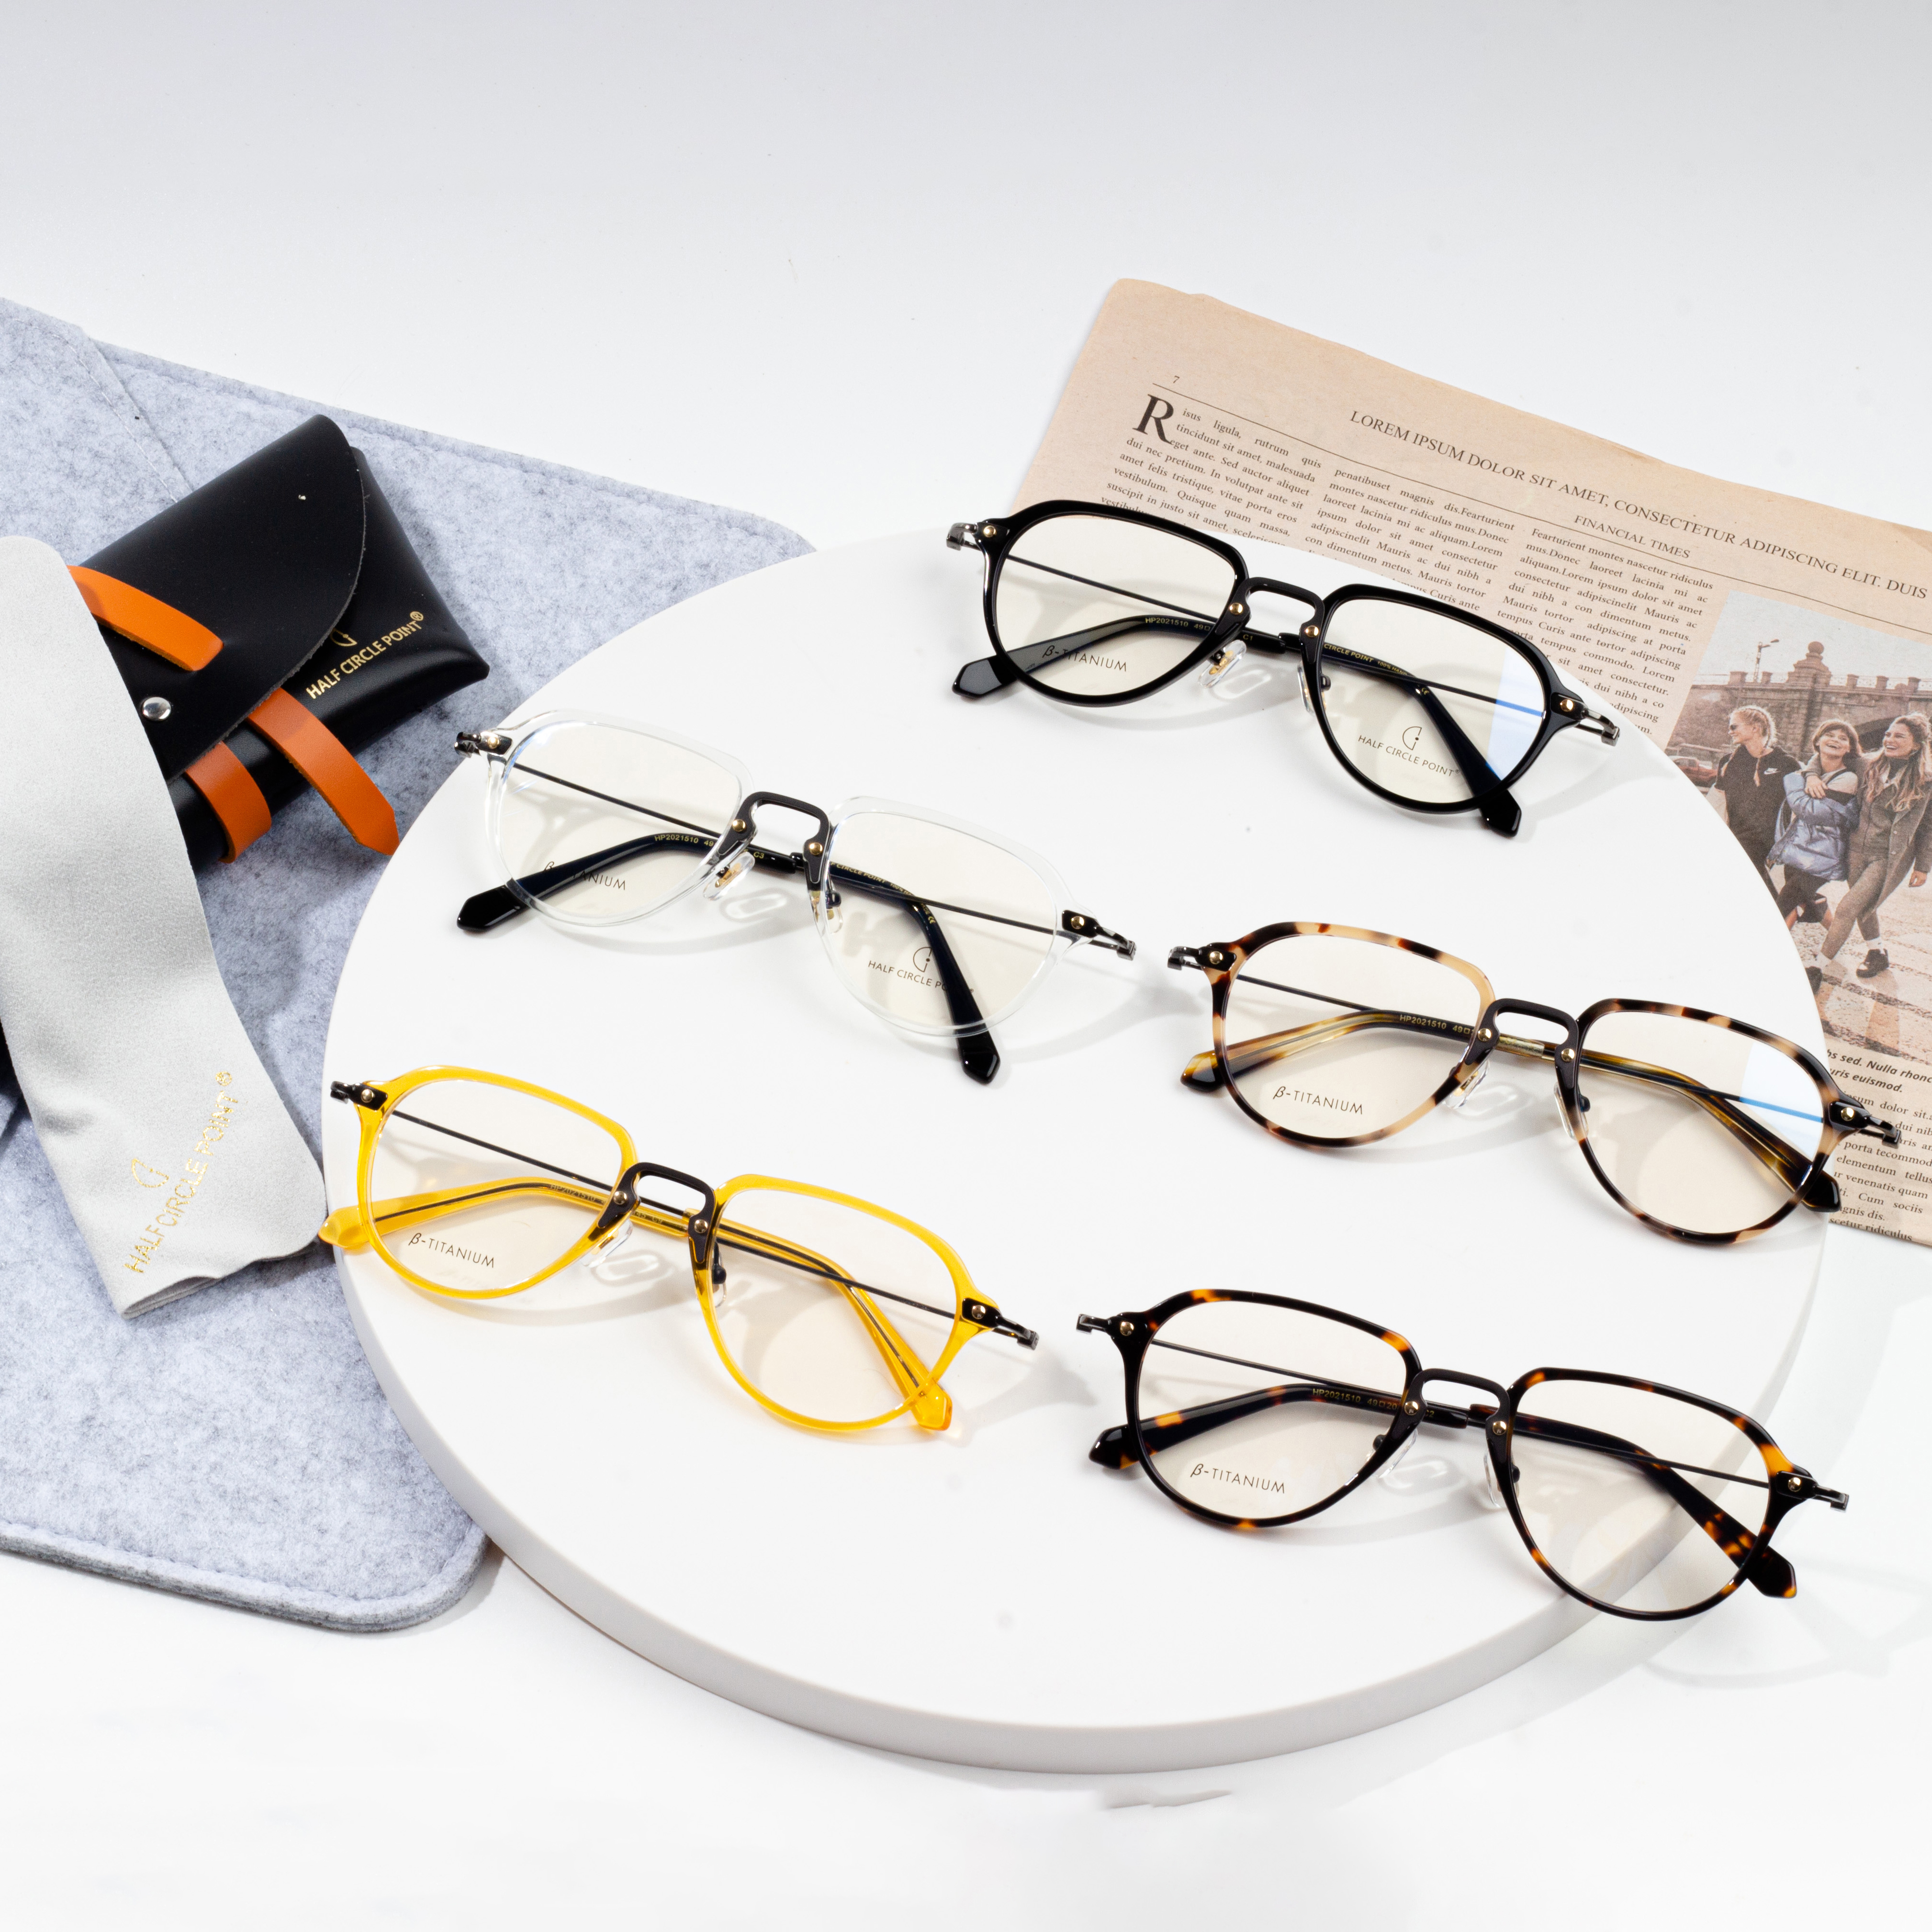 Fashion optyske brillen frames